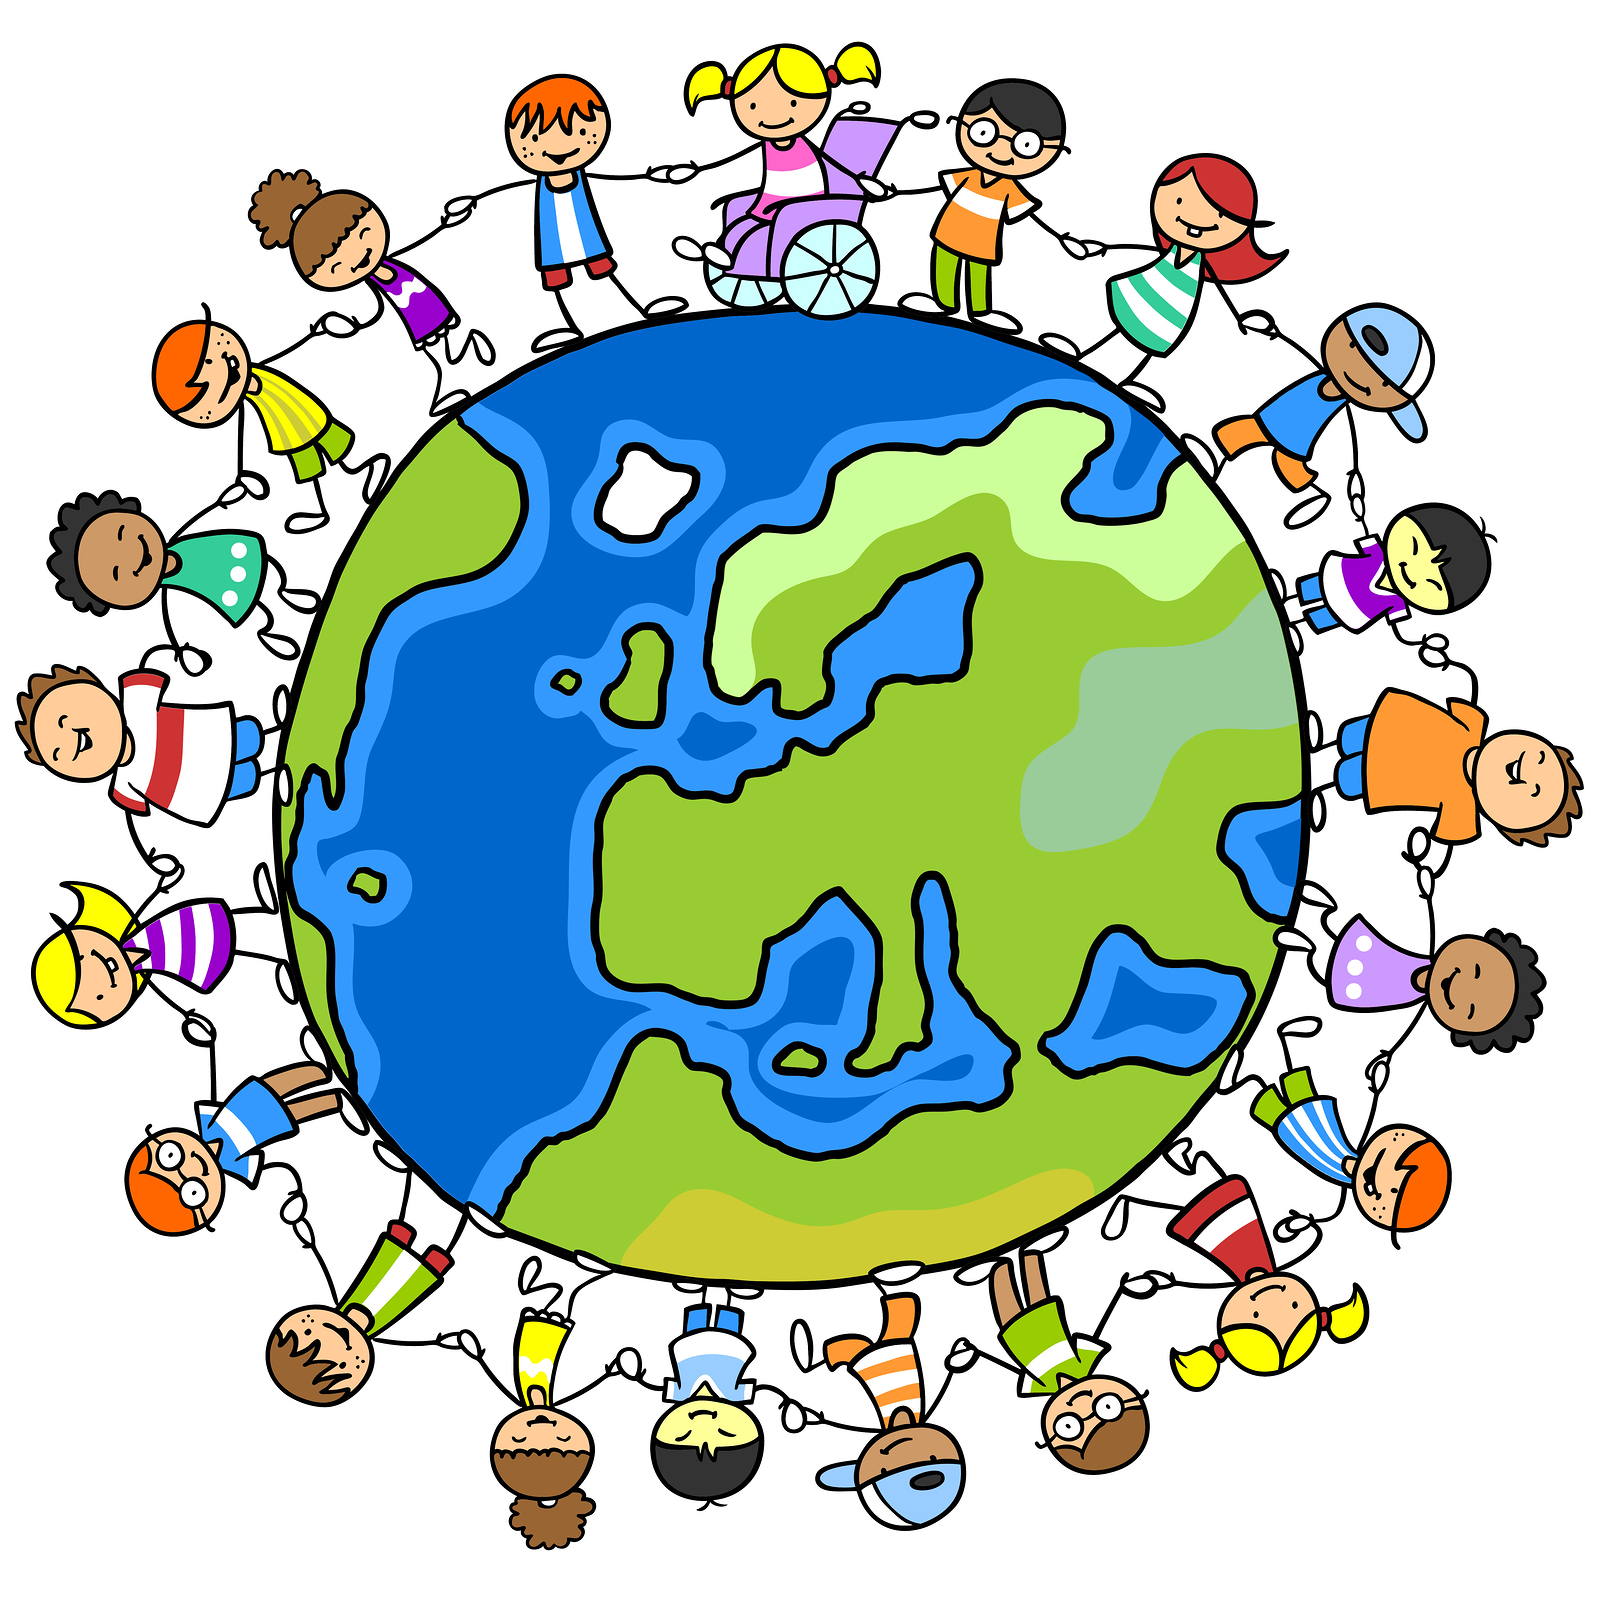 Cartoon of kids around world globe holding hands with girls, boy